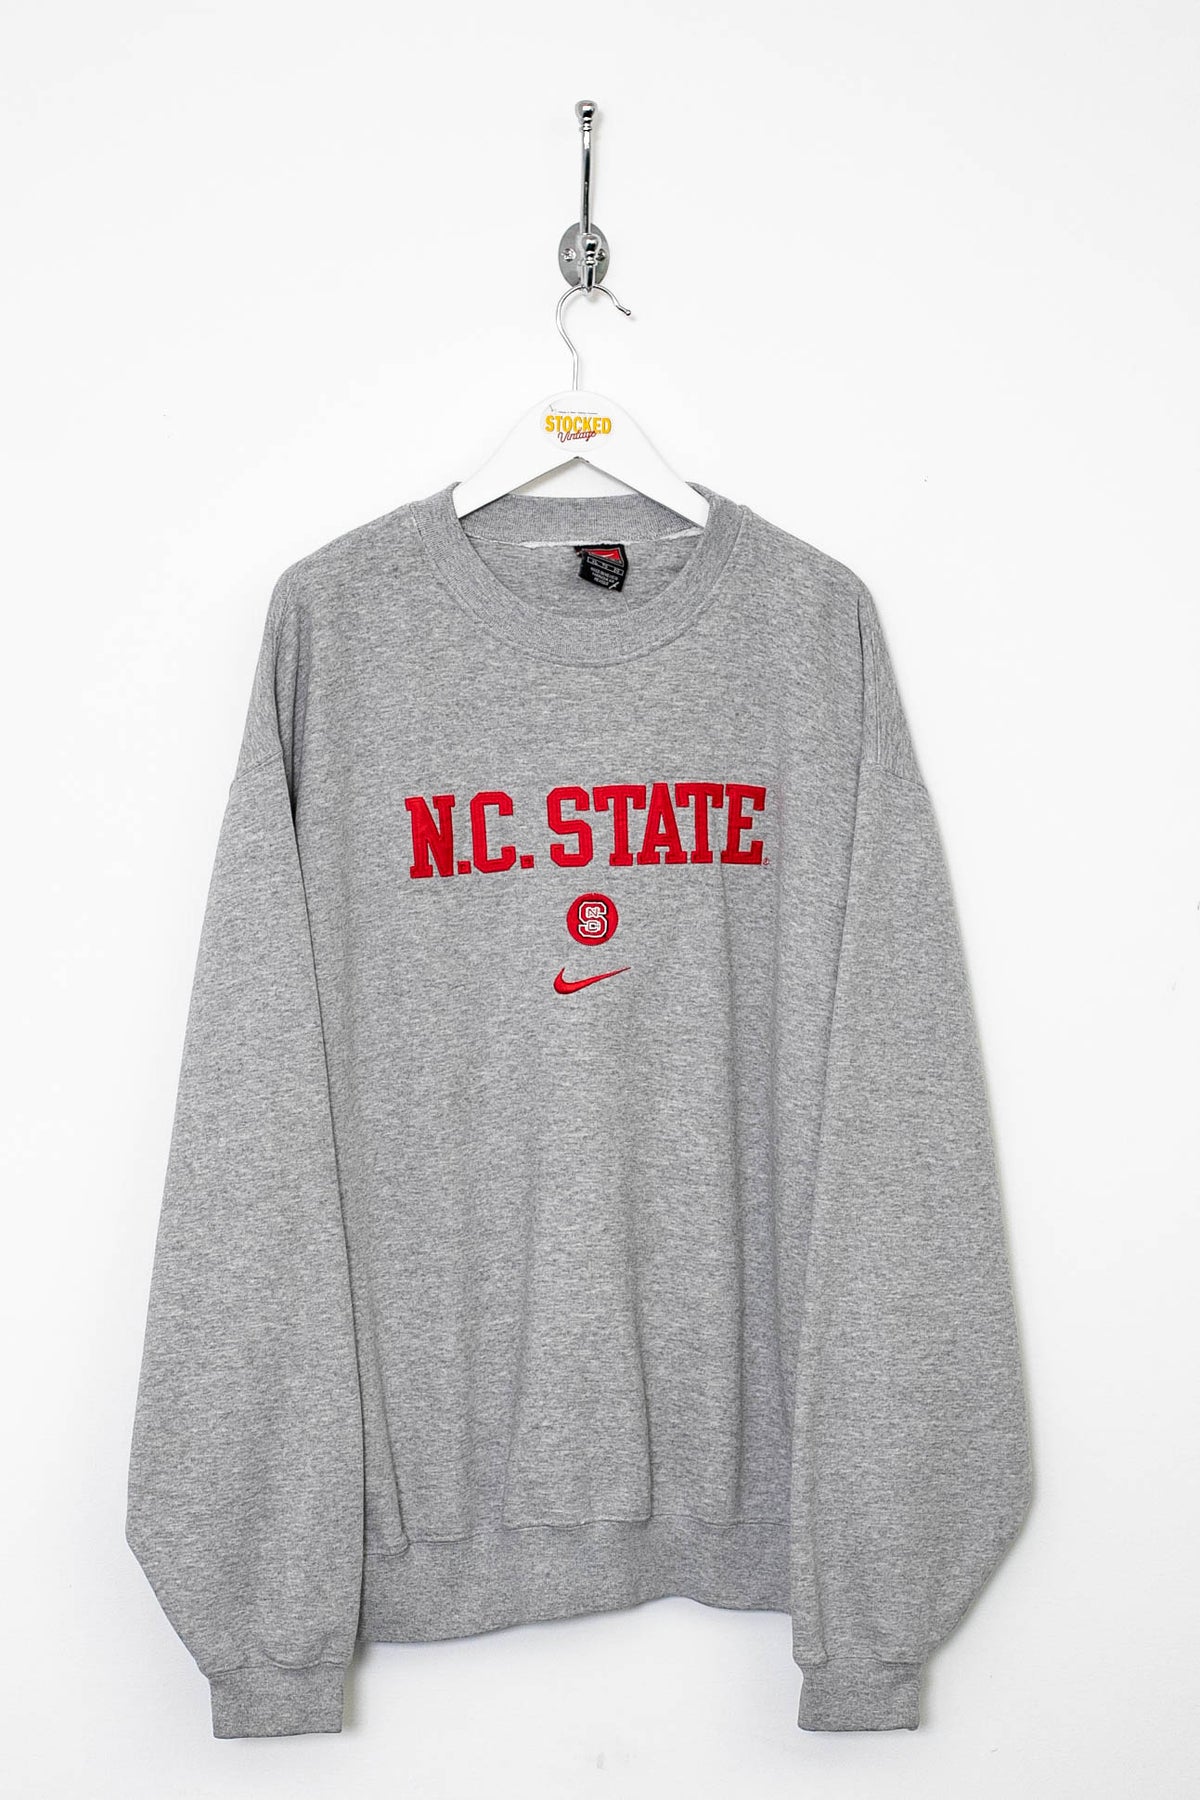 00s Nike N.C. State Sweatshirt (XL)